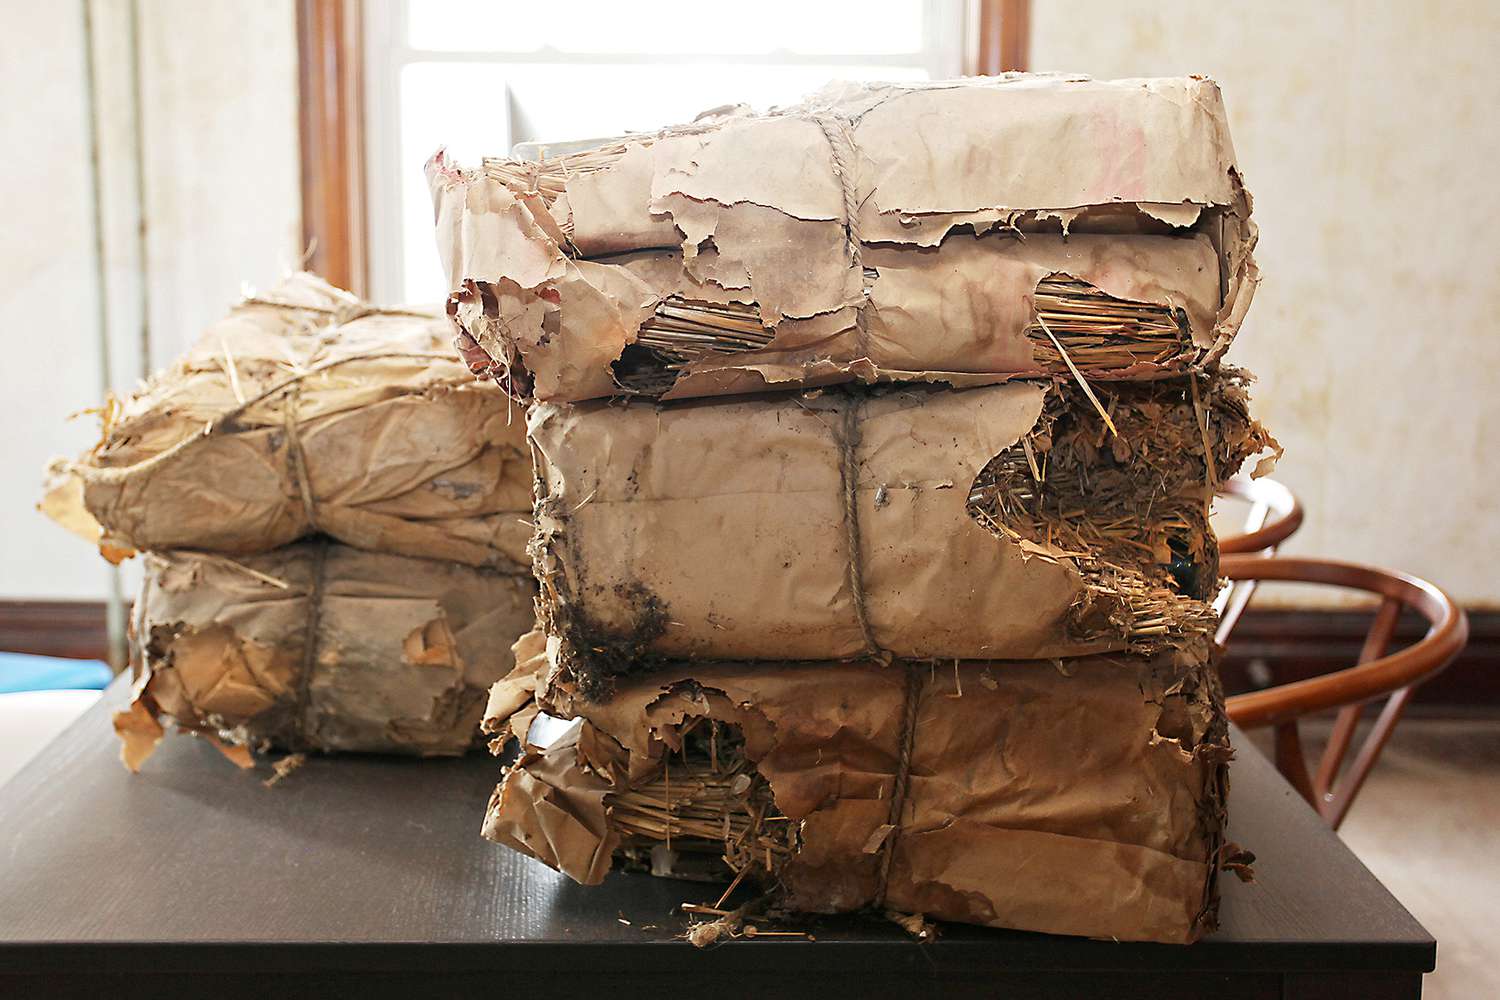 stacked paper-wrapped bundles of prohibition-era imported whiskey bottles